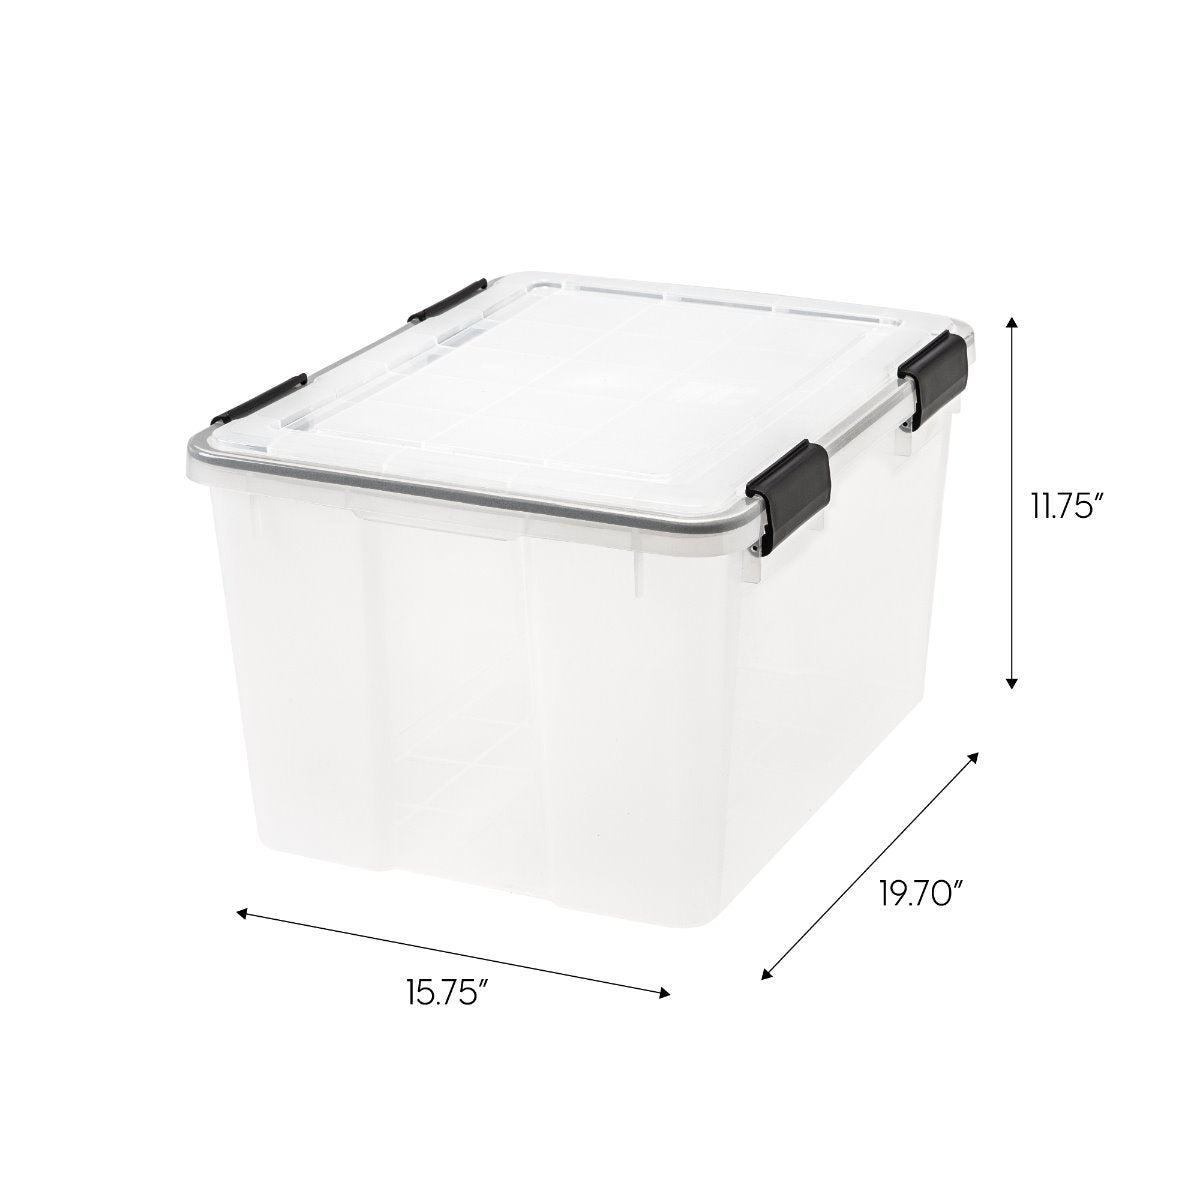 IRIS Weathertight Storage Box, 62 Quart Clear 